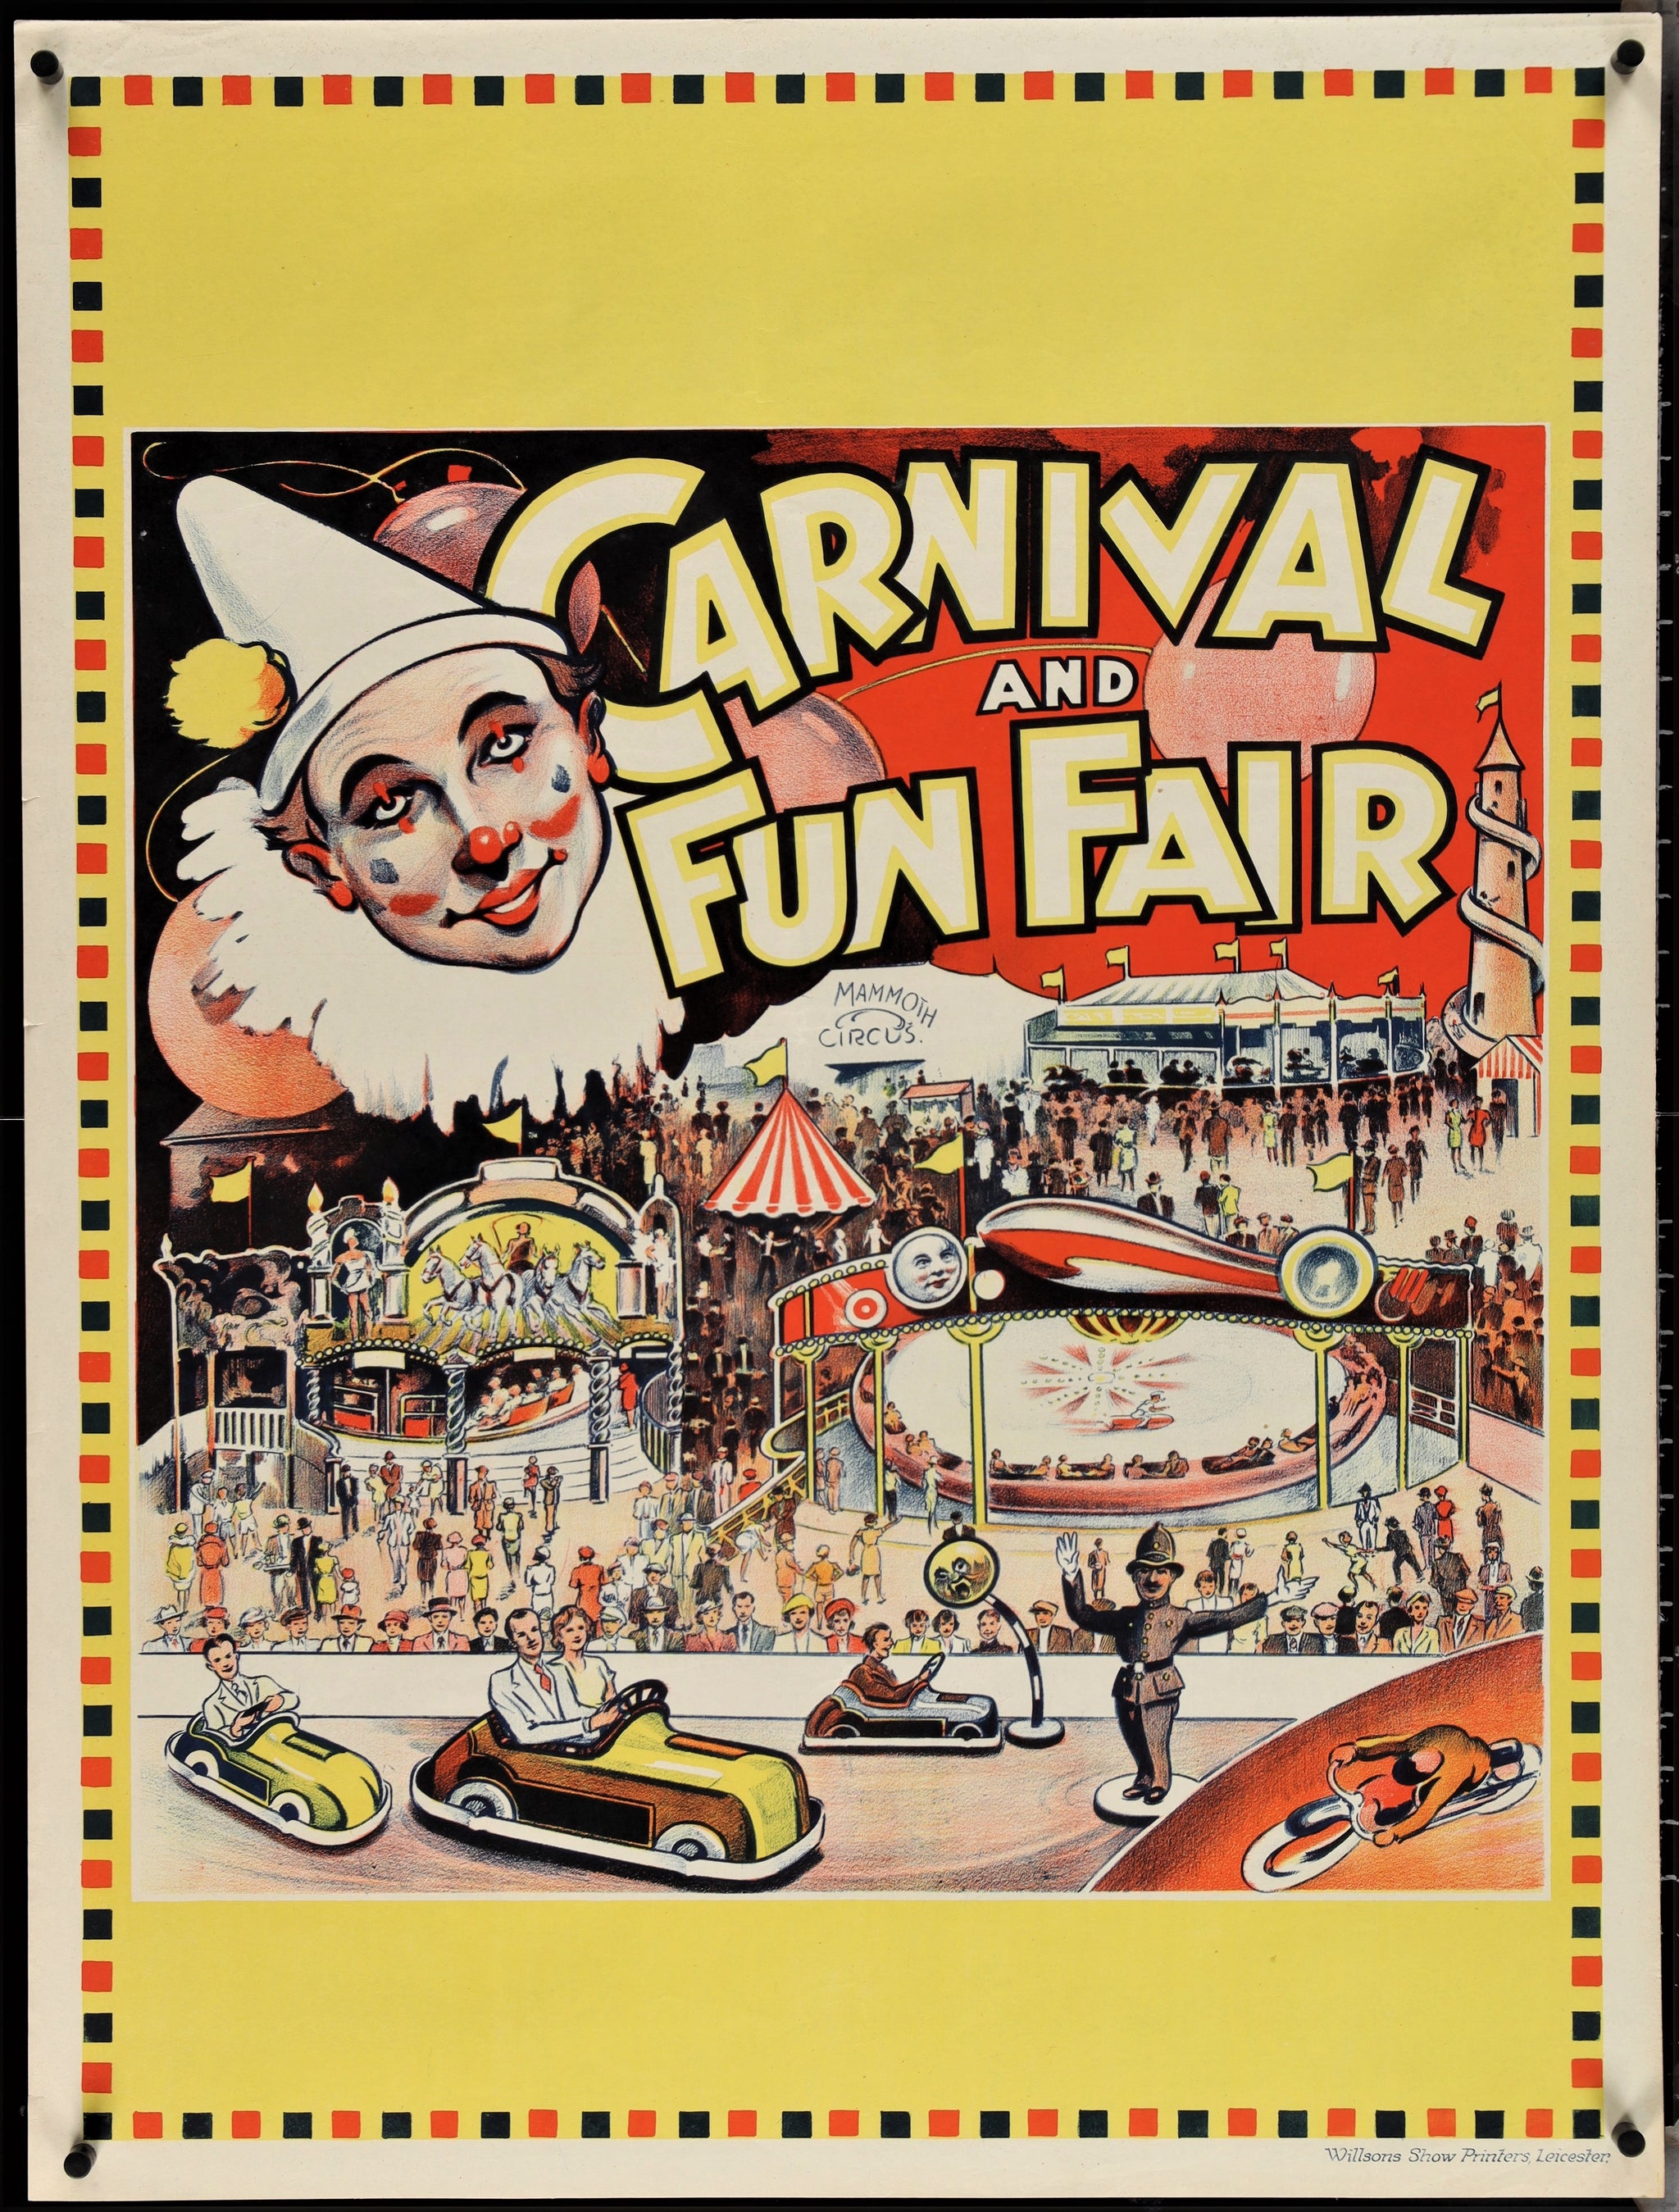 Authentic Vintage Poster  Mammoth Circus- Carnival Fun Fair